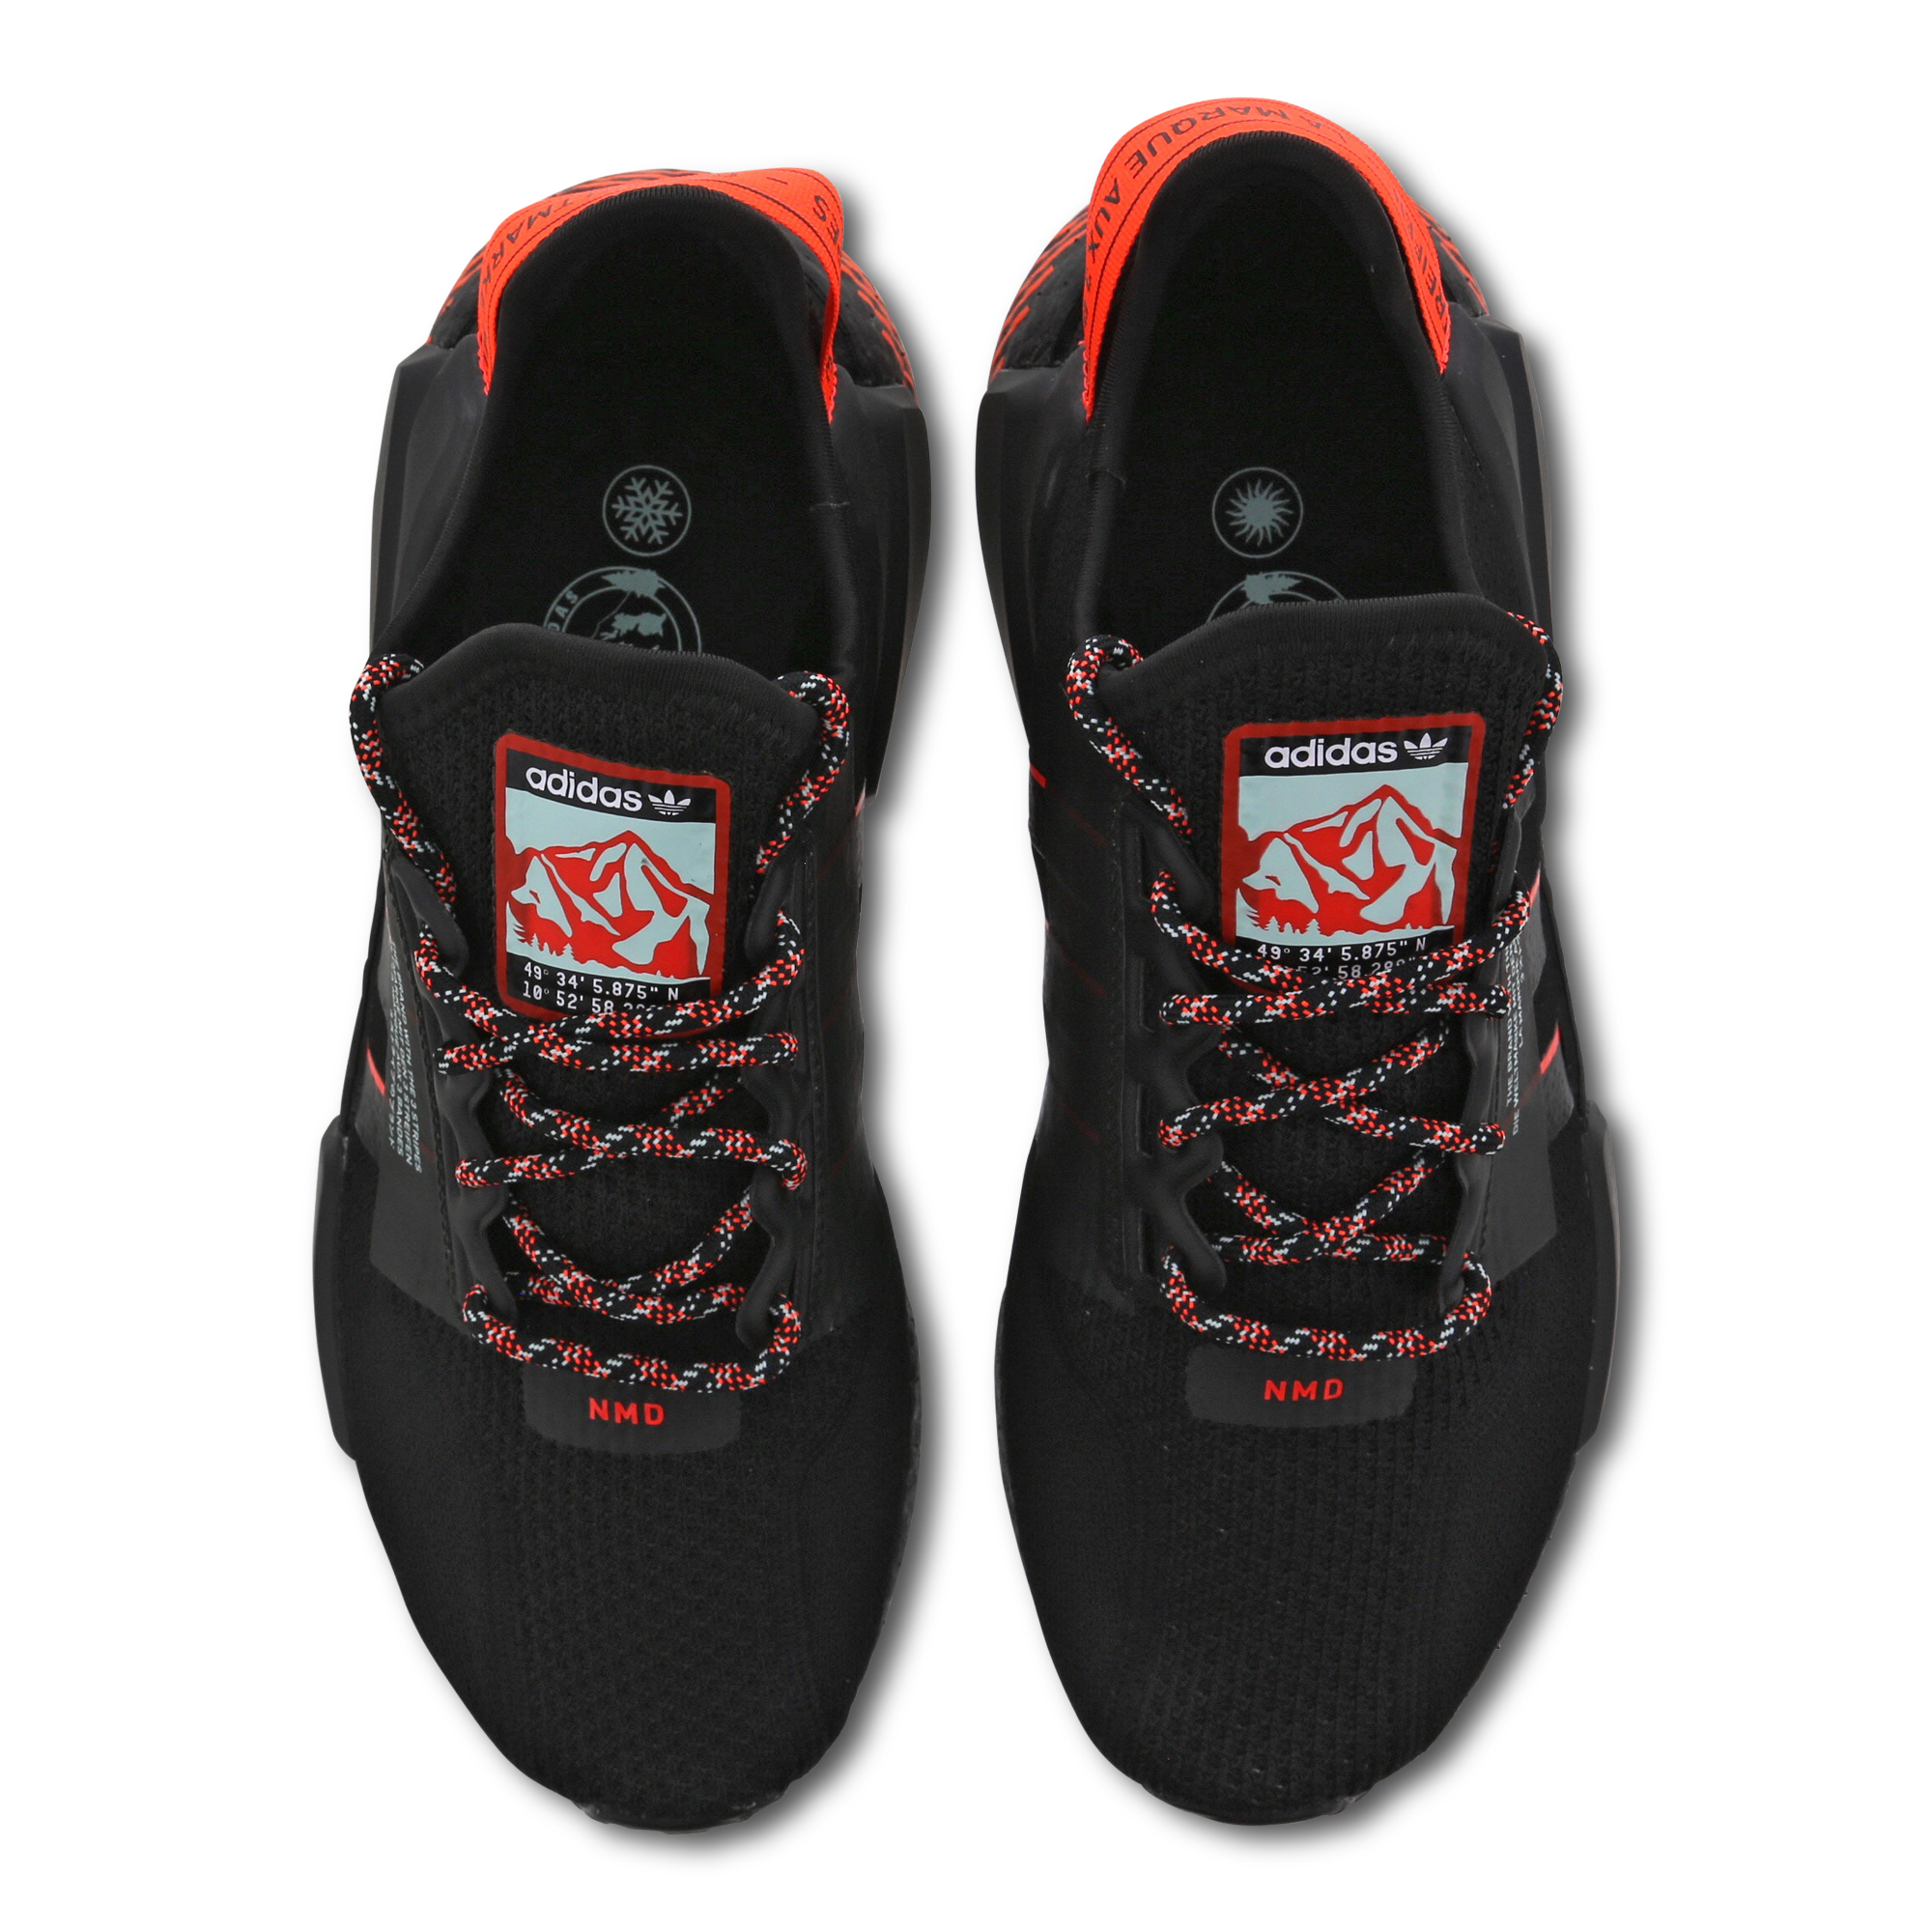 NMD R1 Black Red Tag 3psports Adidas